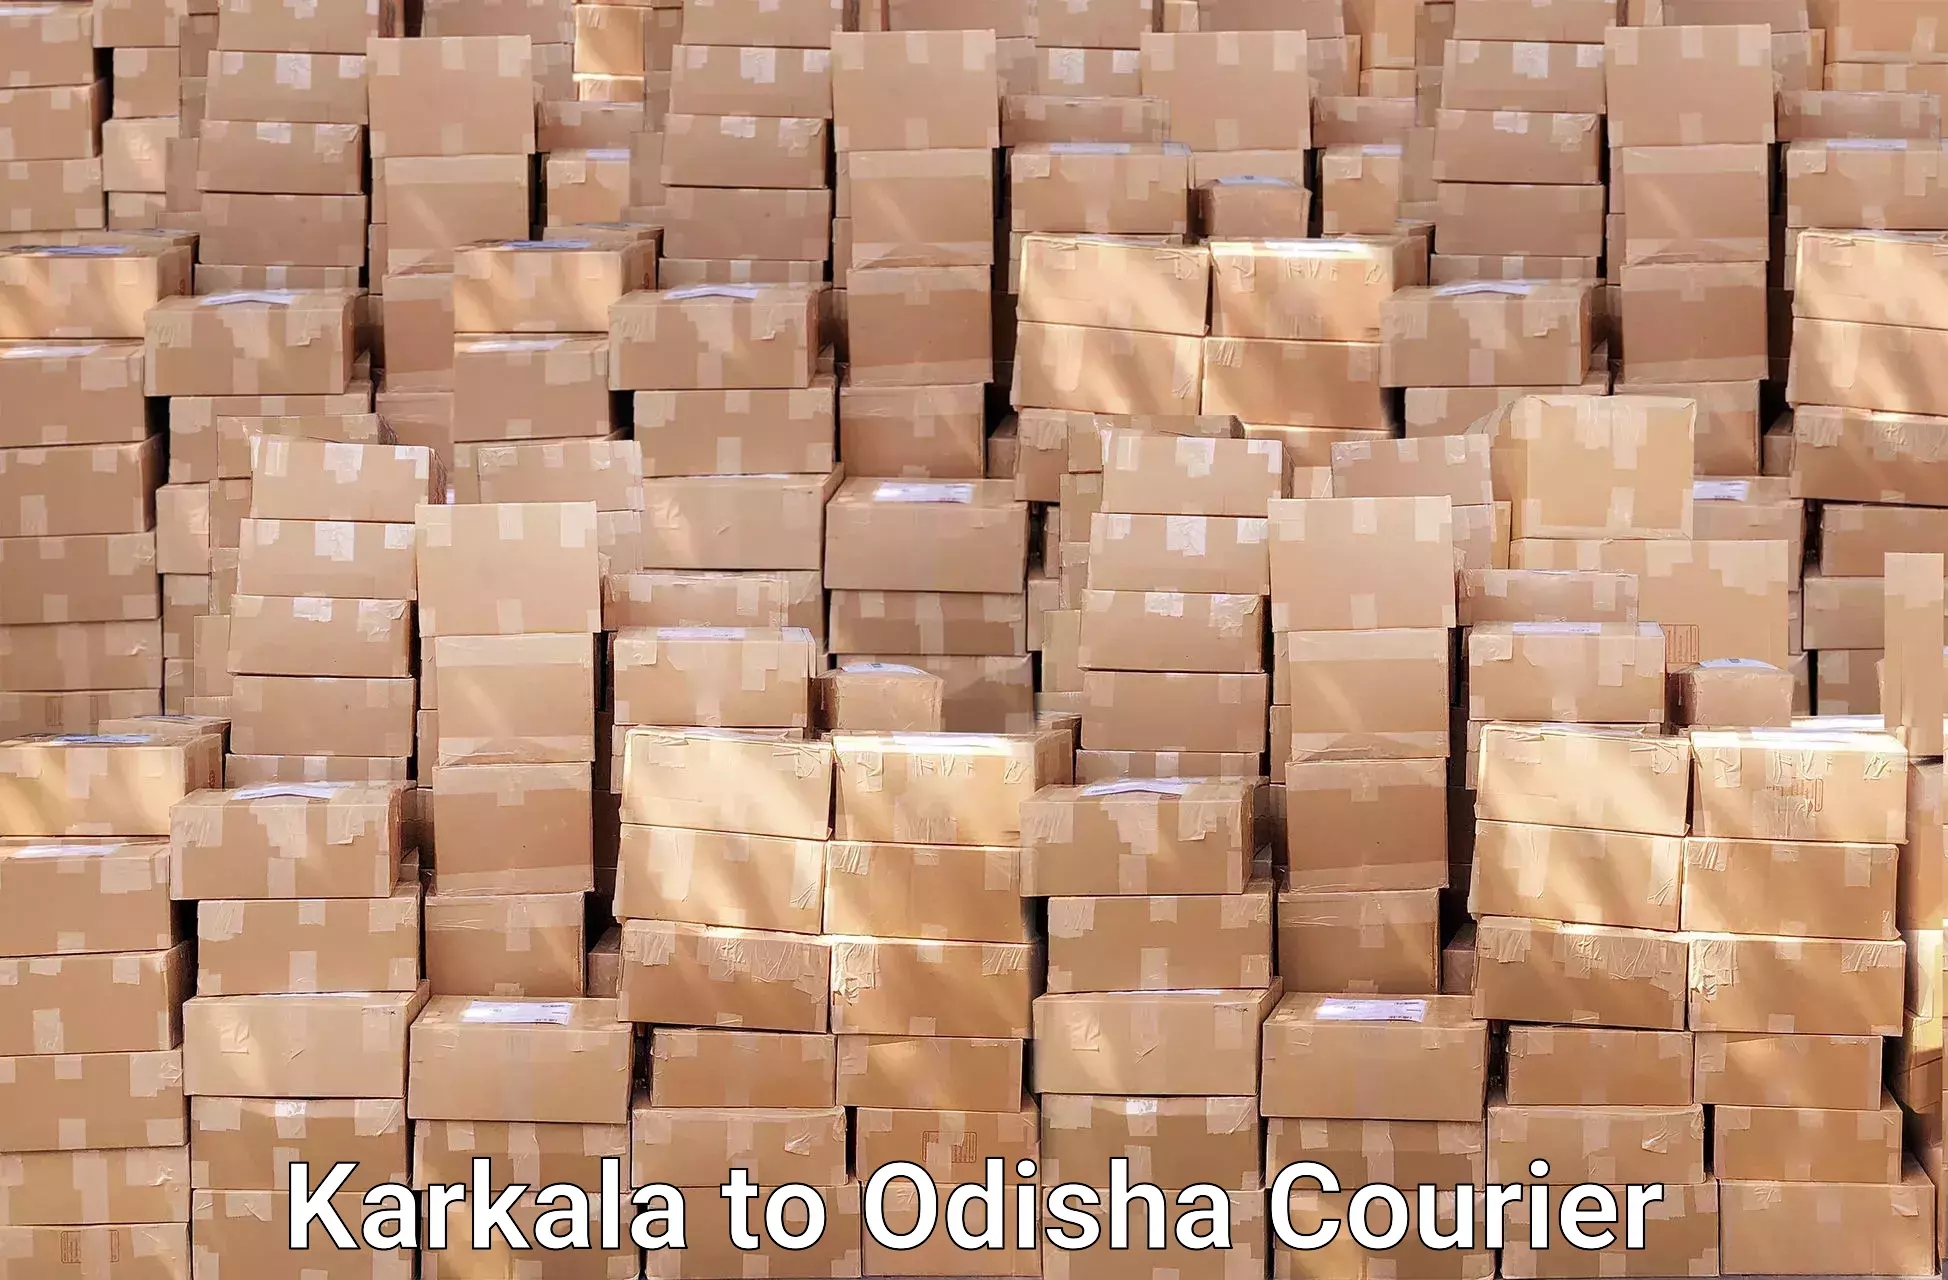 Professional moving company Karkala to Odisha